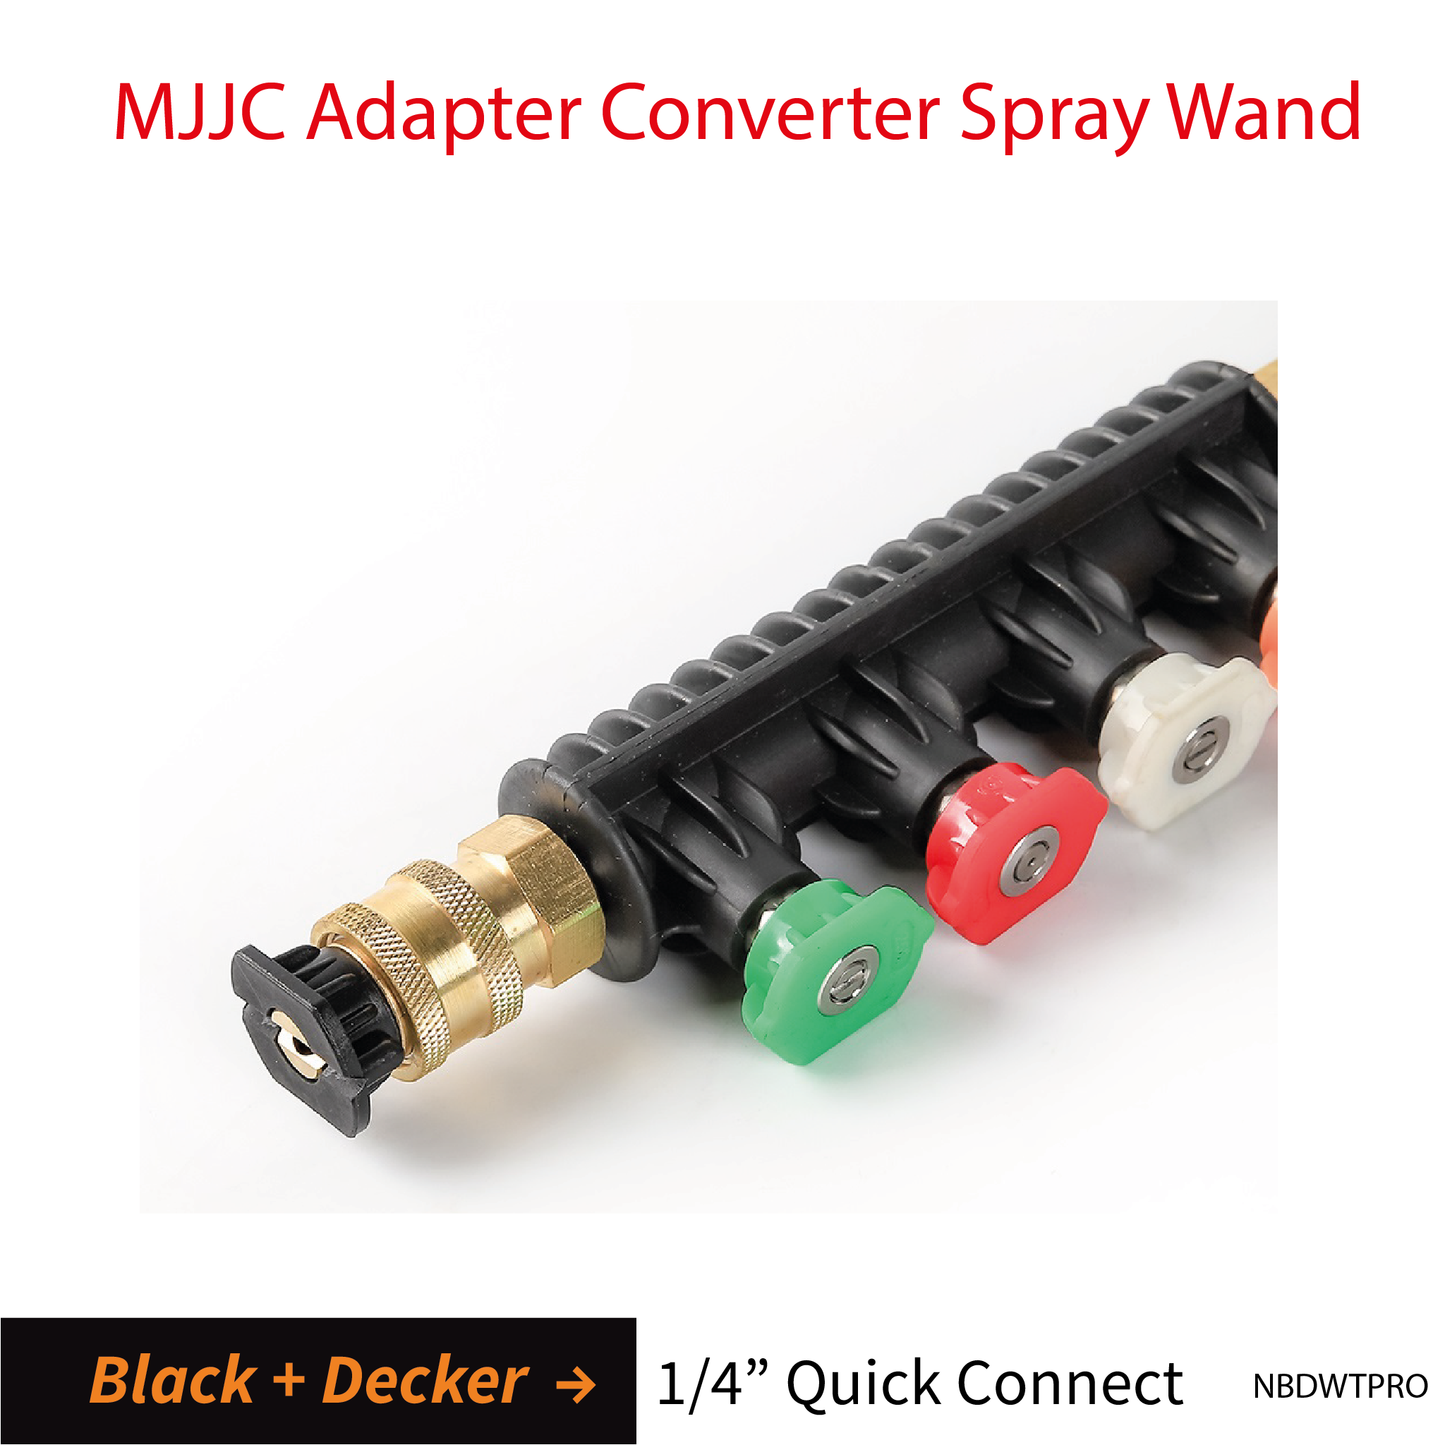 Black & Decker MJJC Adapter Conversion Converter pressure washer Spray Wand with 5 spray tips